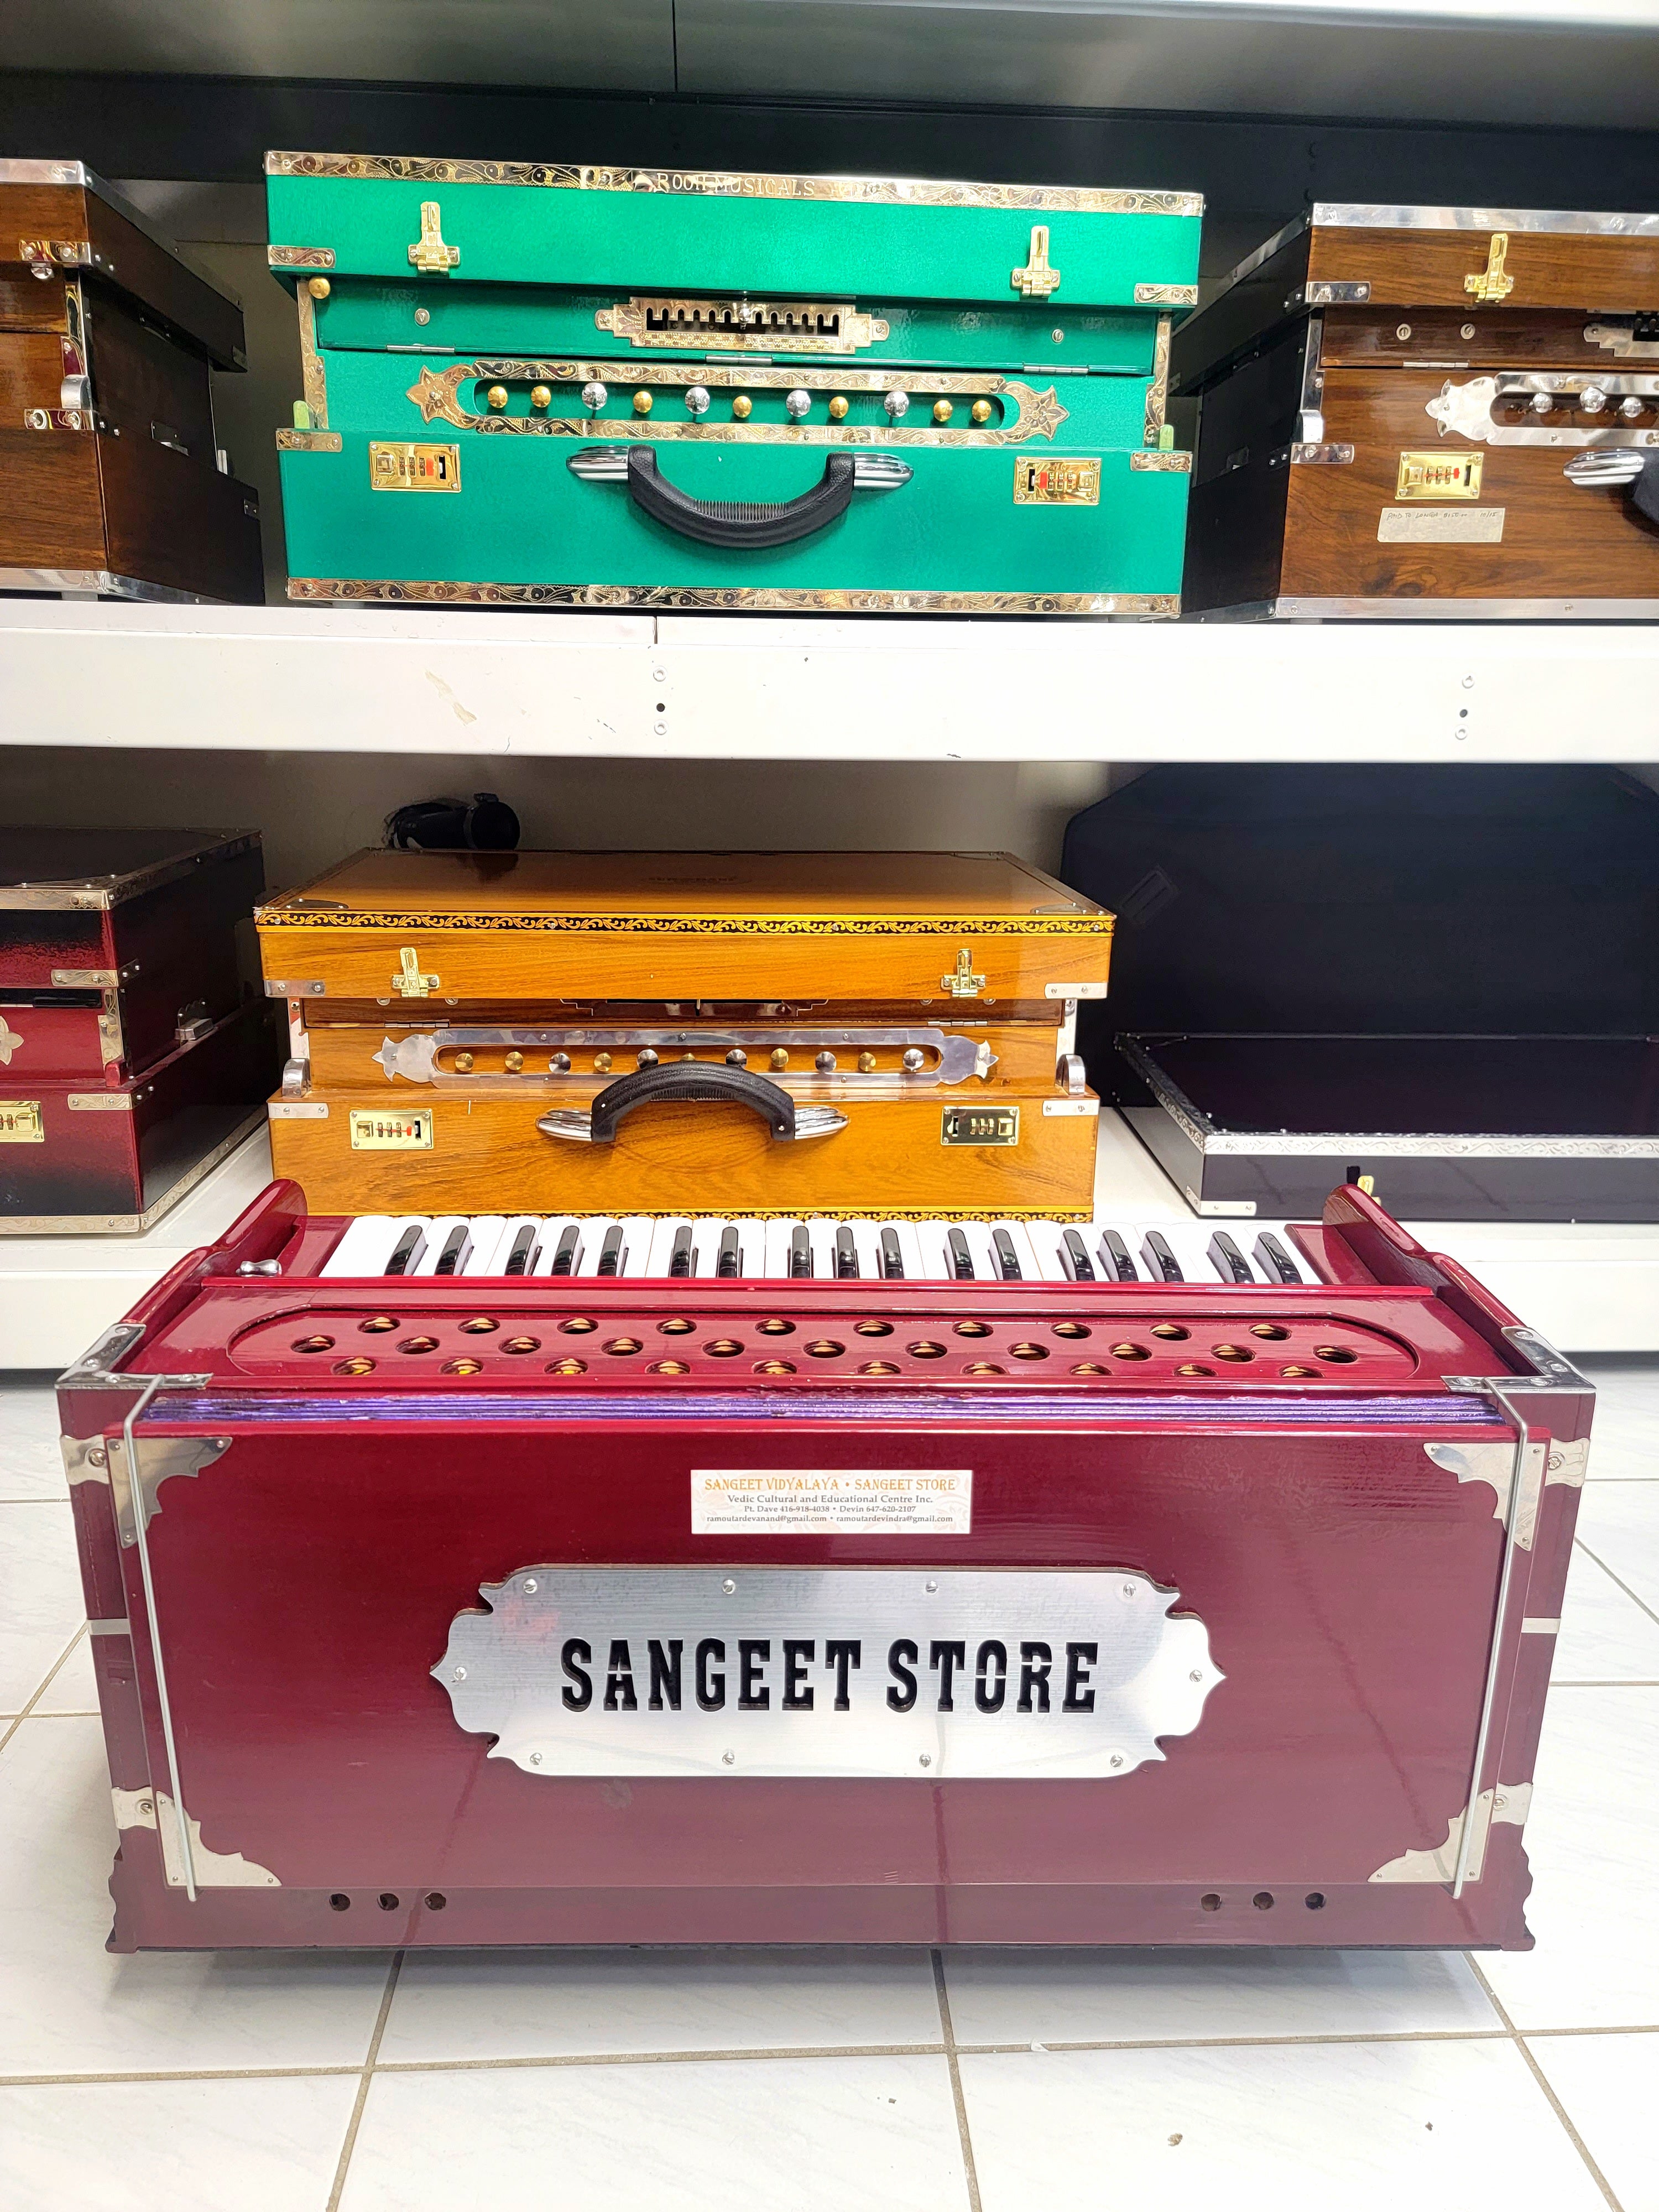 Full Professional Boxed Harmonium (42 Keys + Coupler) - Sangeet Store